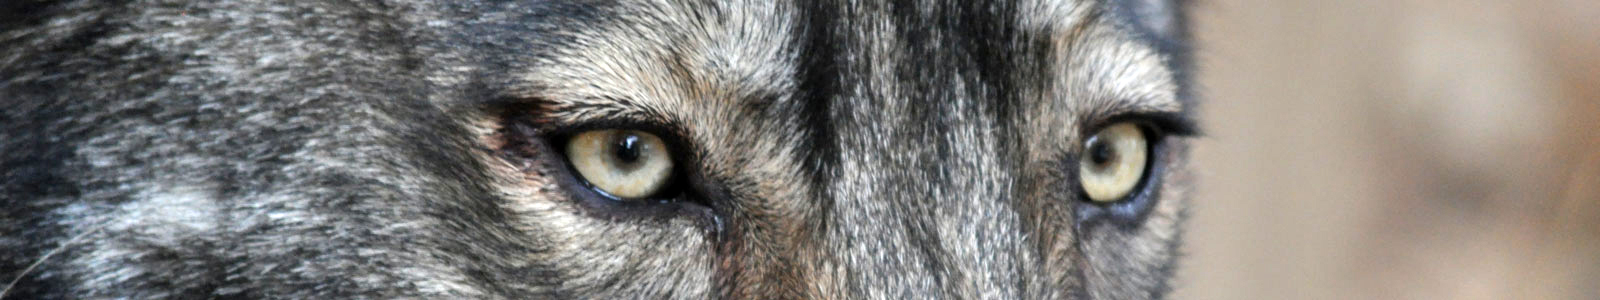 Texas Wolfdog Project Jordan Sheade Header Image